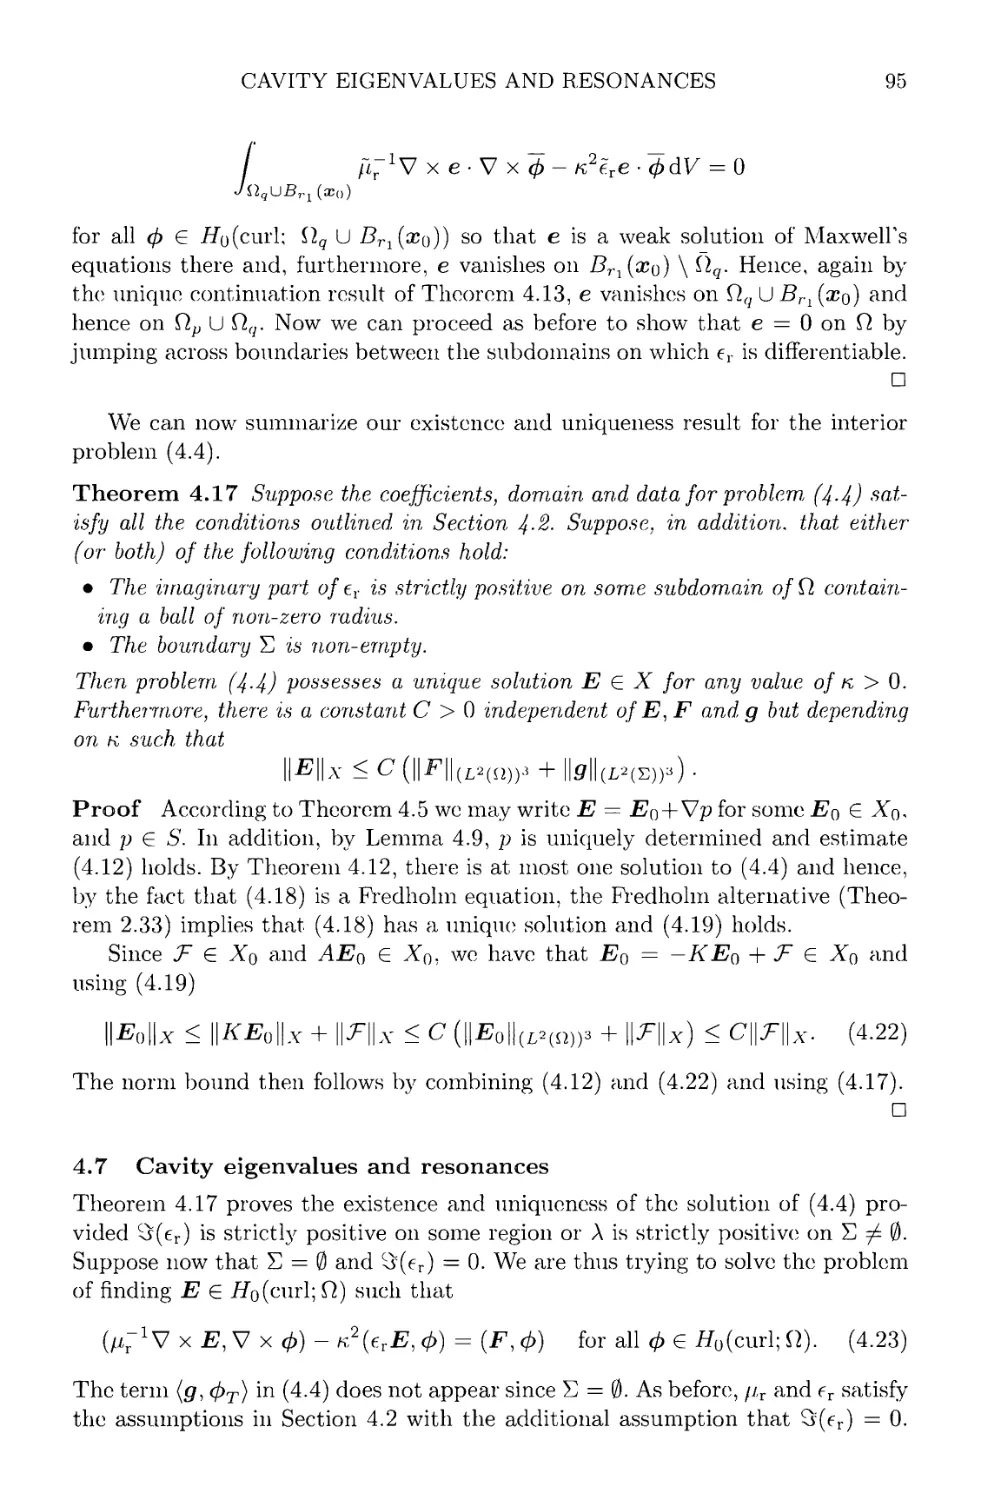 4.7 Cavity eigenvalues and resonances